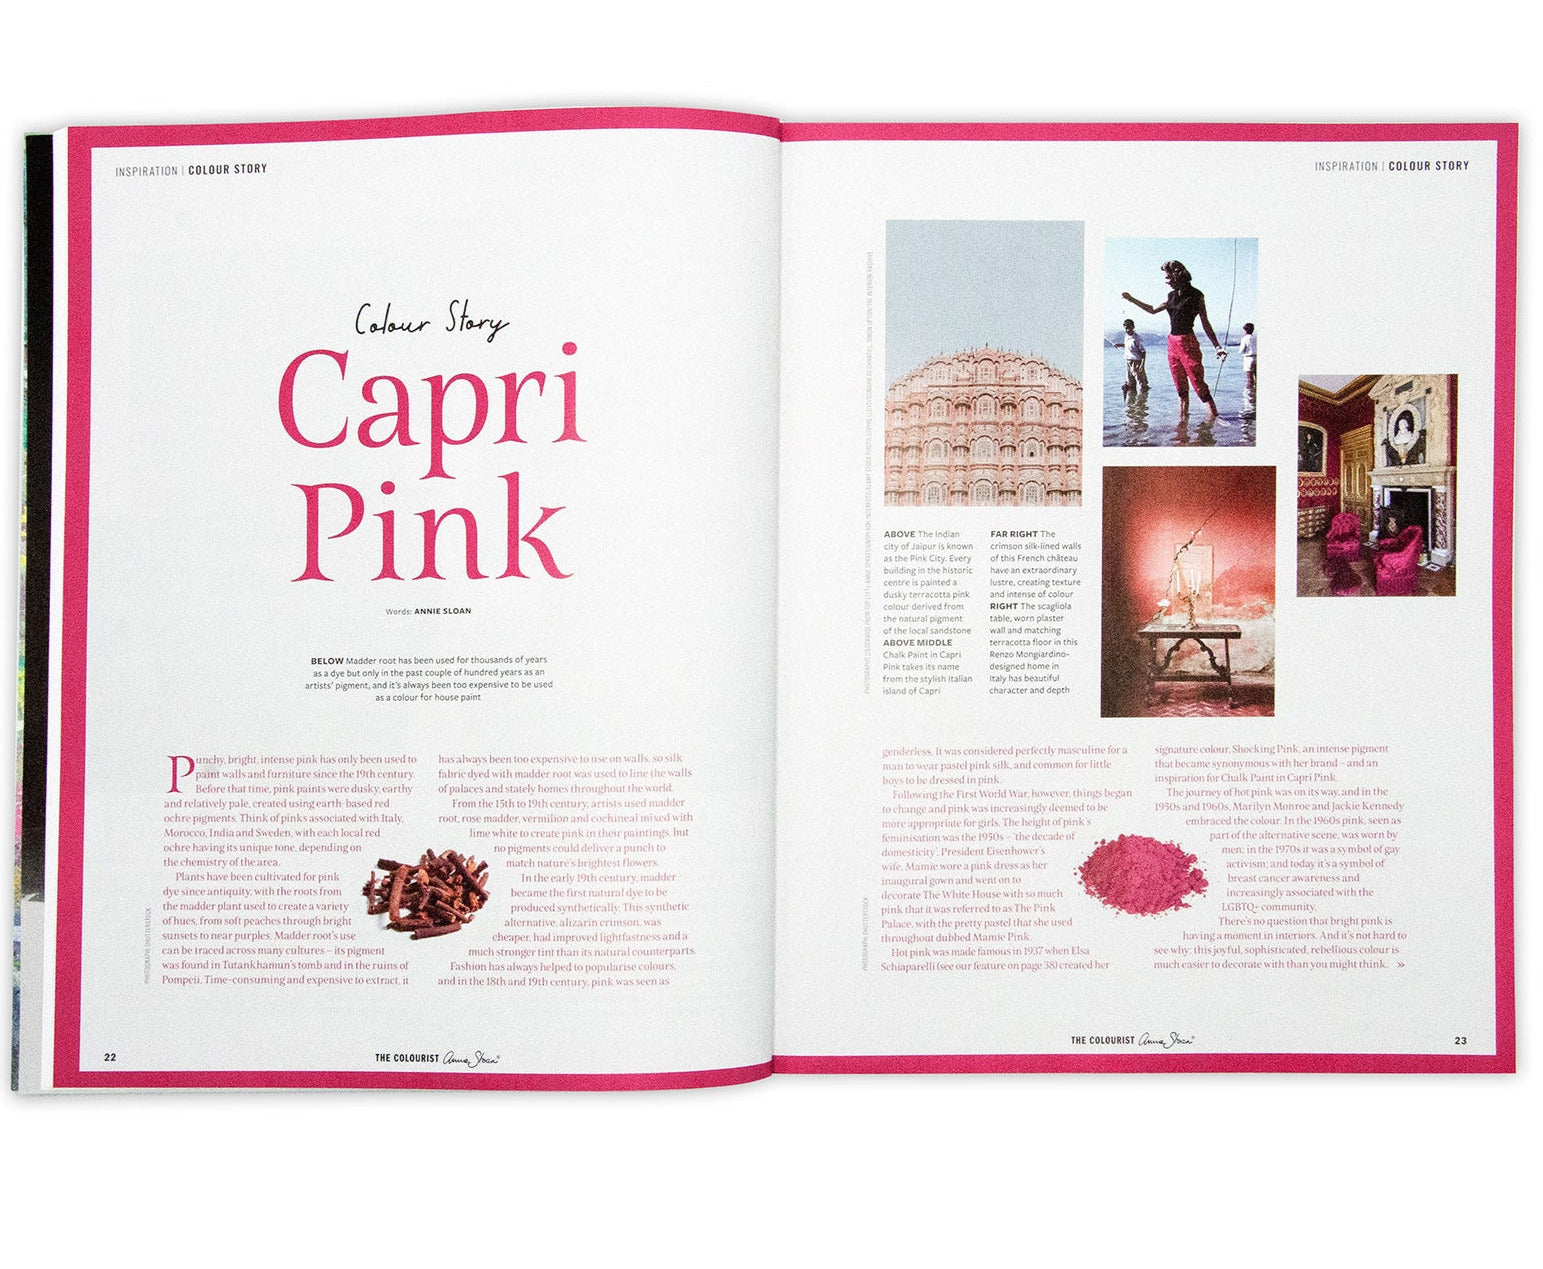 Den nya kulören Capri Pink presenteras i Annie Sloans magasin nr 6 The Colourist.